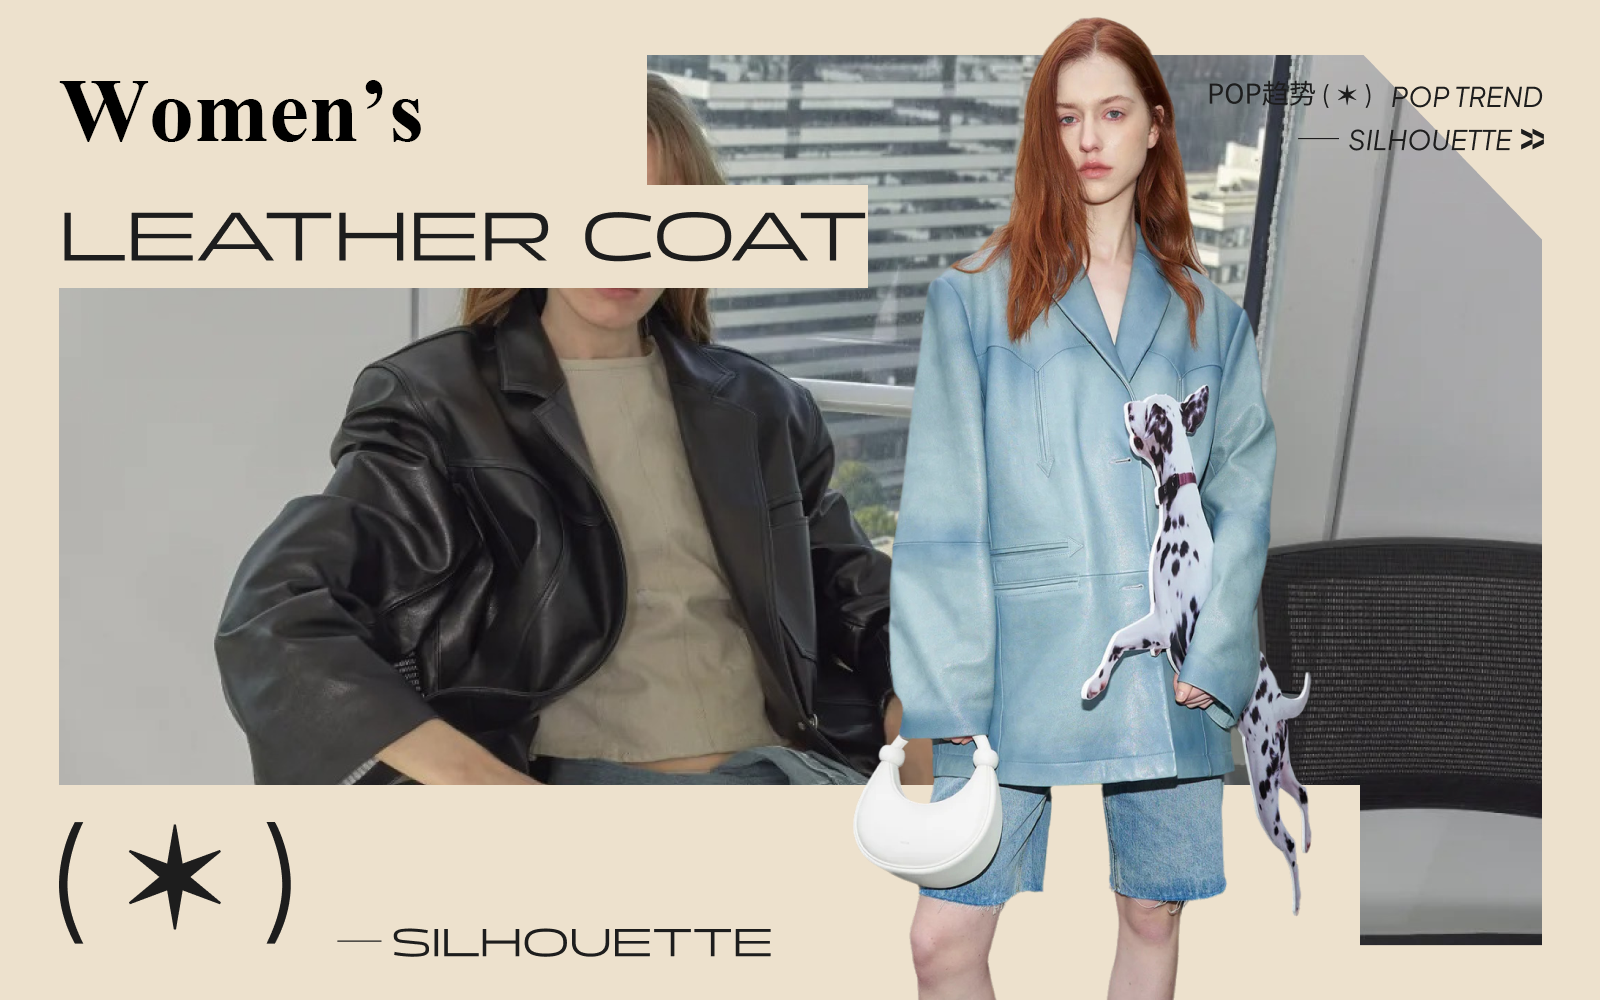 Urban Quiet Luxury -- The Silhouette Trend for Women's Leather Coat